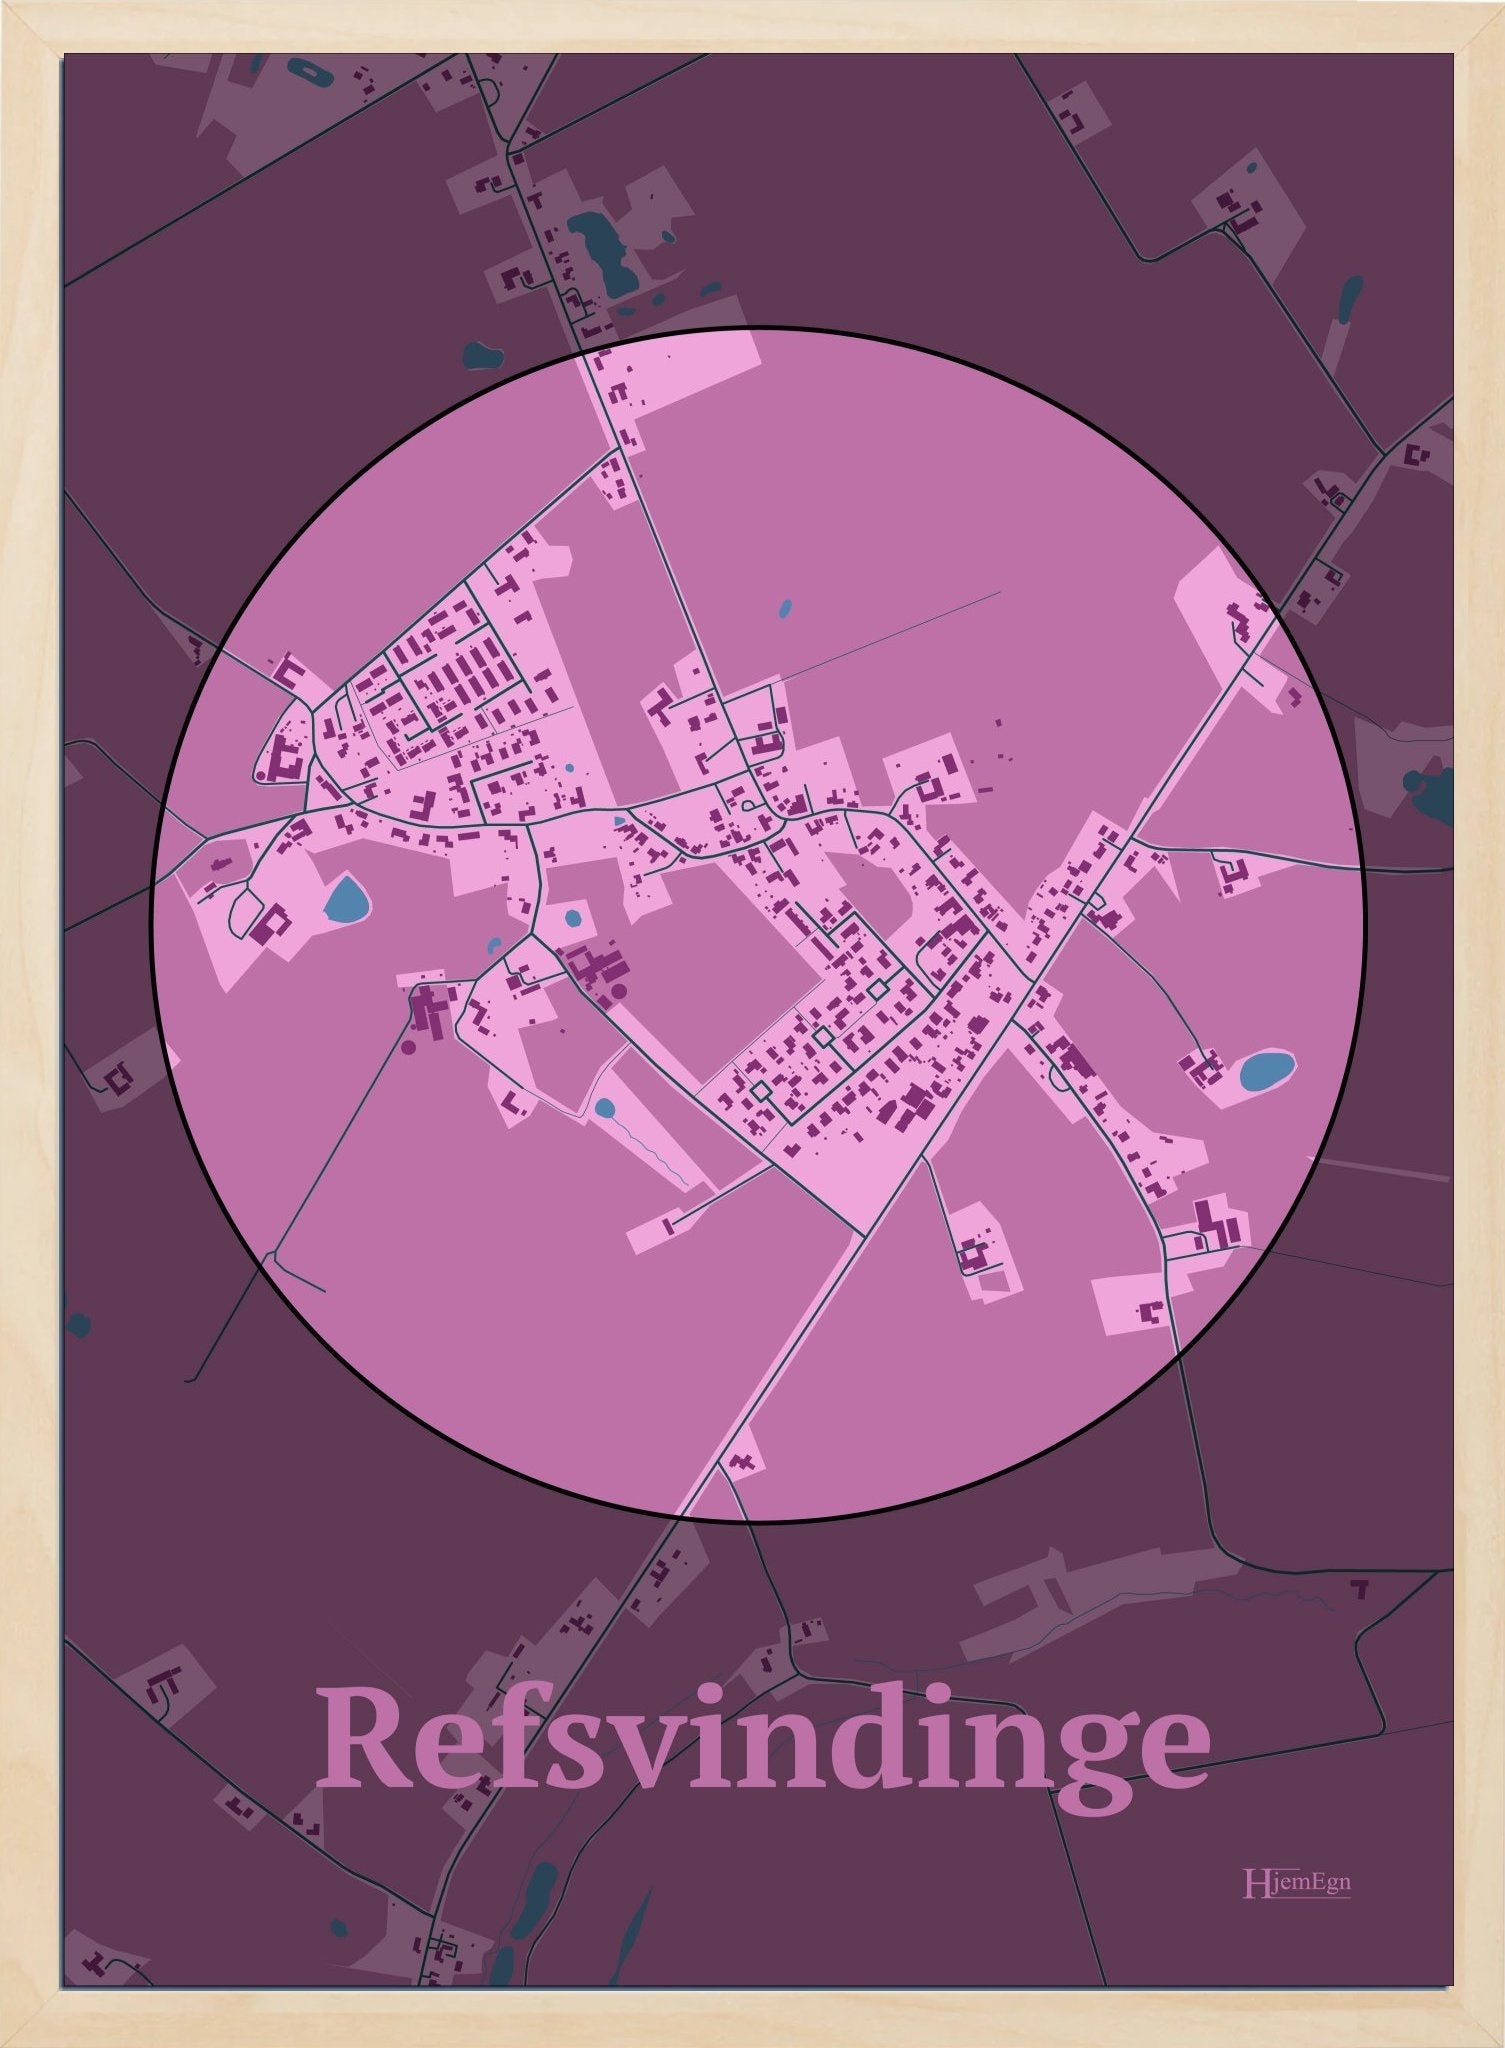 Refsvindinge plakat i farve pastel rød og HjemEgn.dk design centrum. Design bykort for Refsvindinge